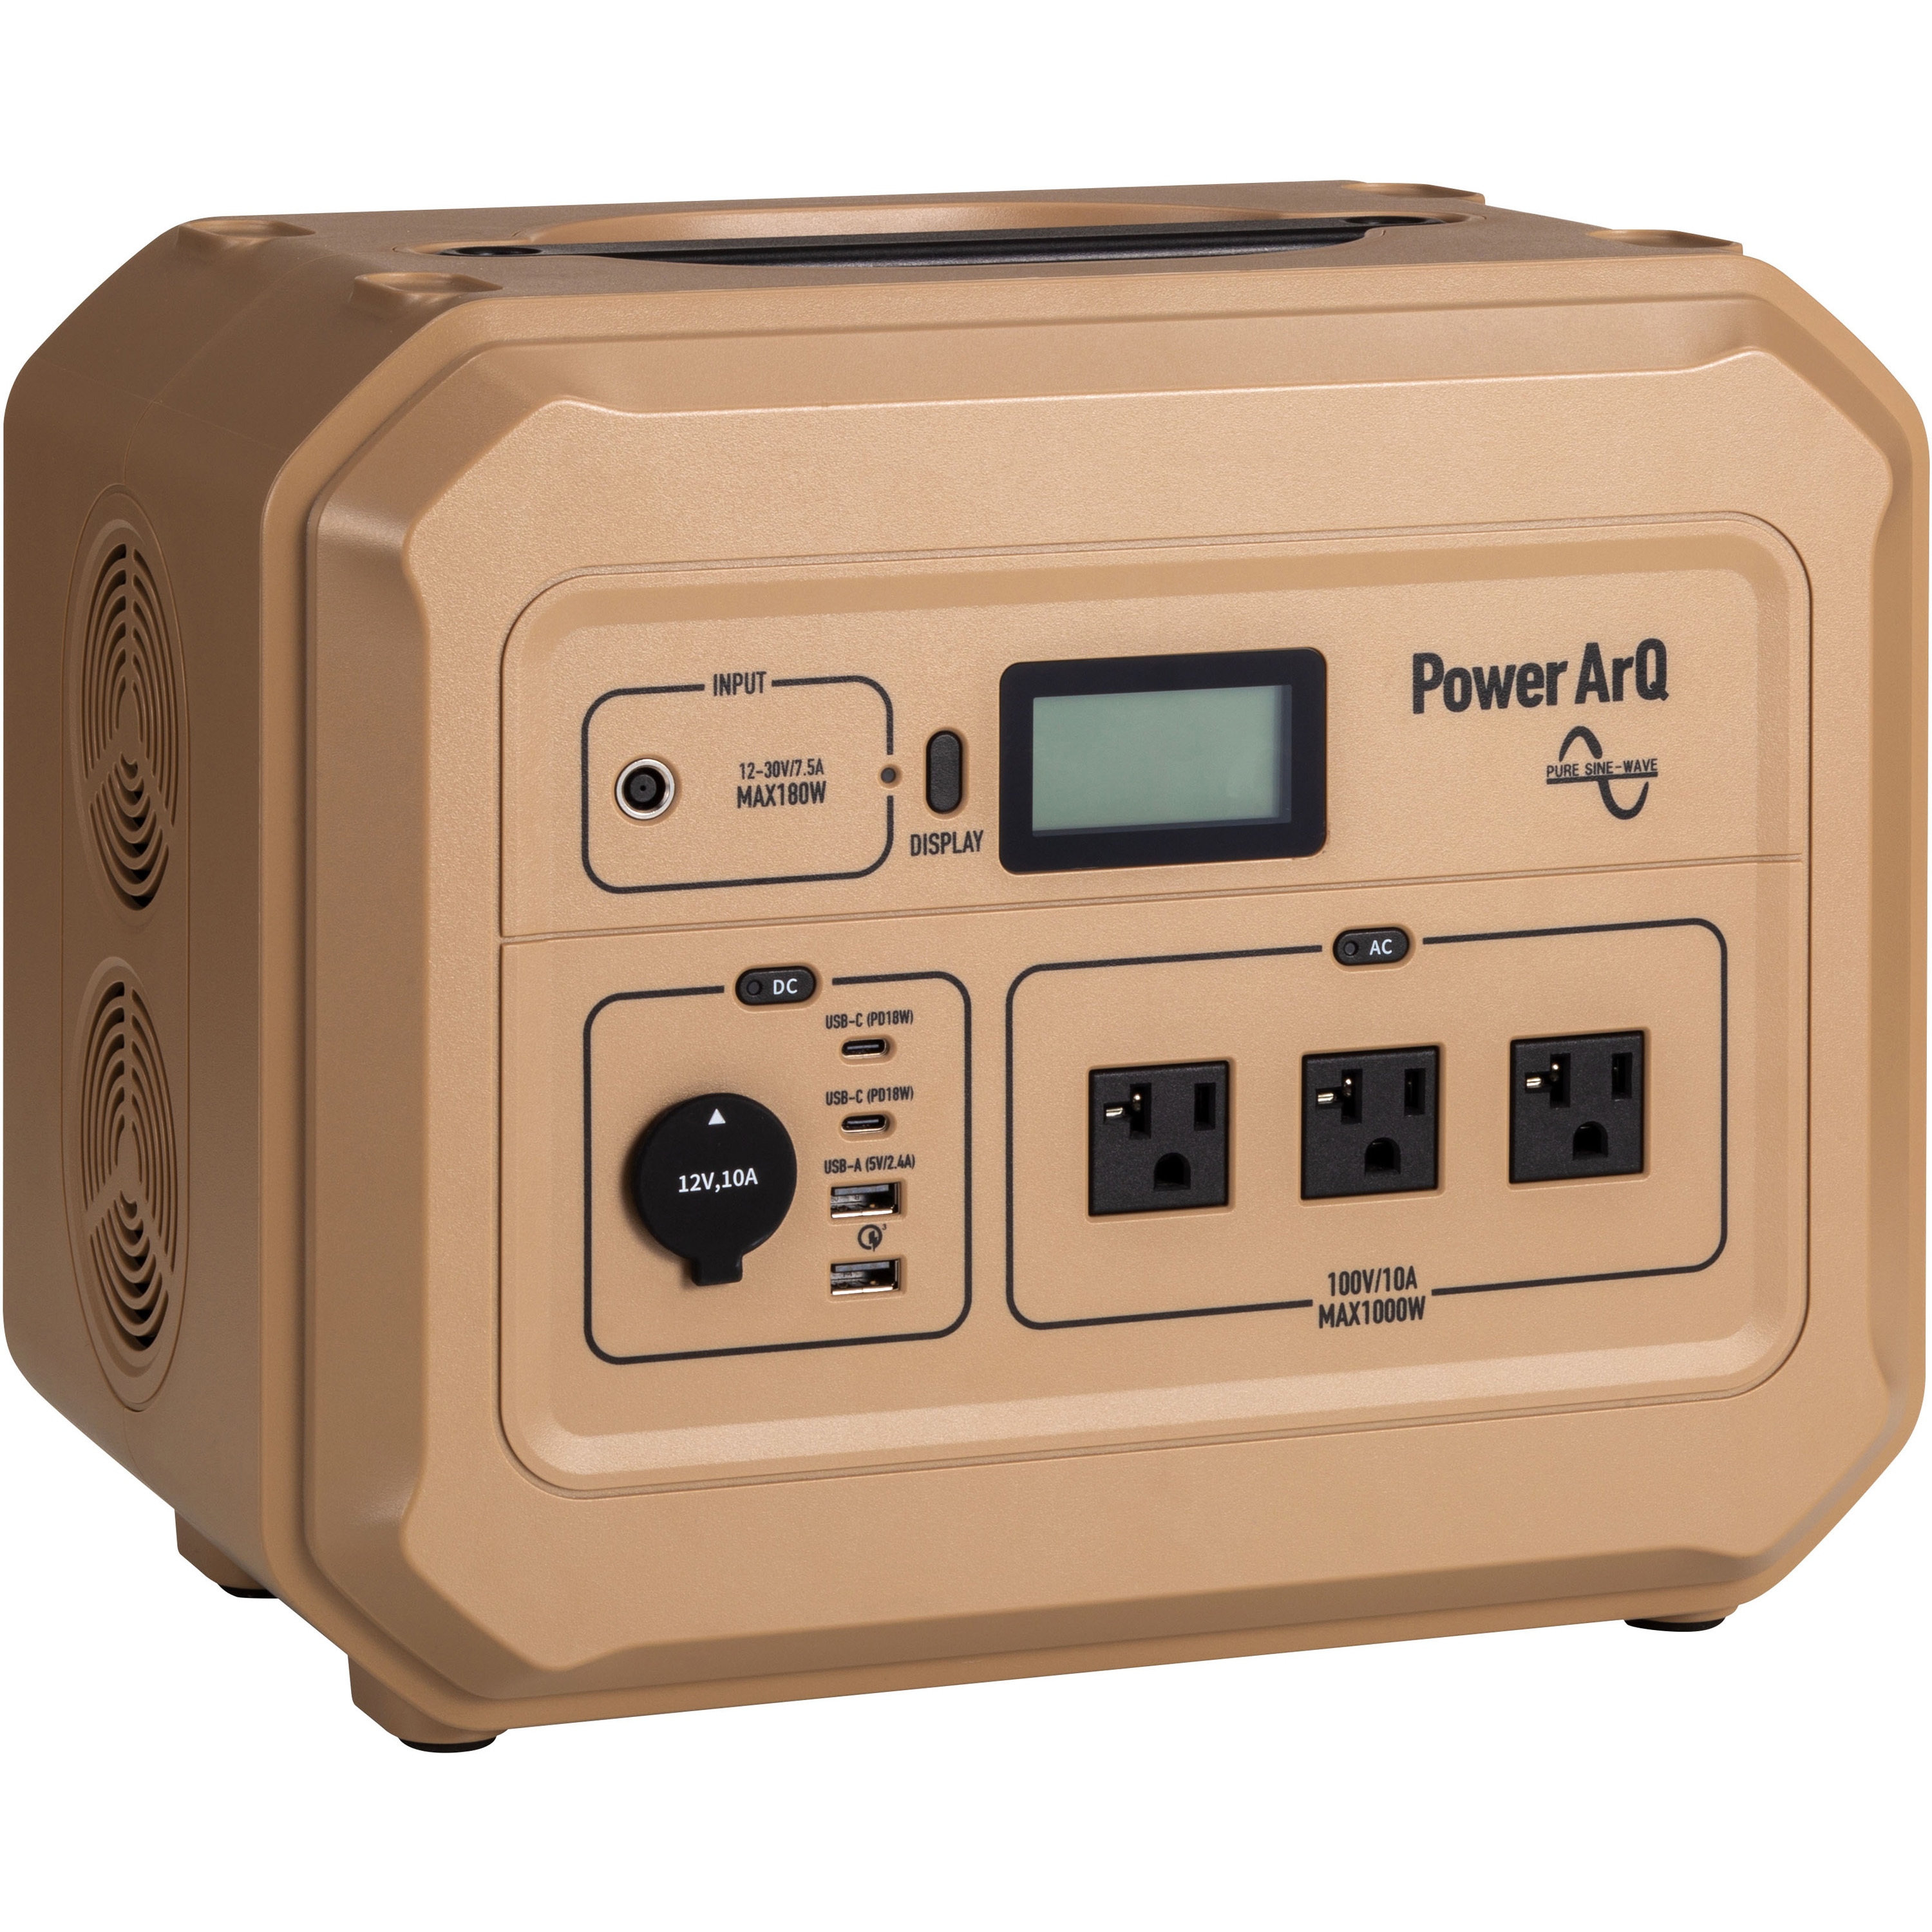 HTE060-TN ポータブル電源 PowerArQ Pro 1000Wh 蓄電池 大容量 1個